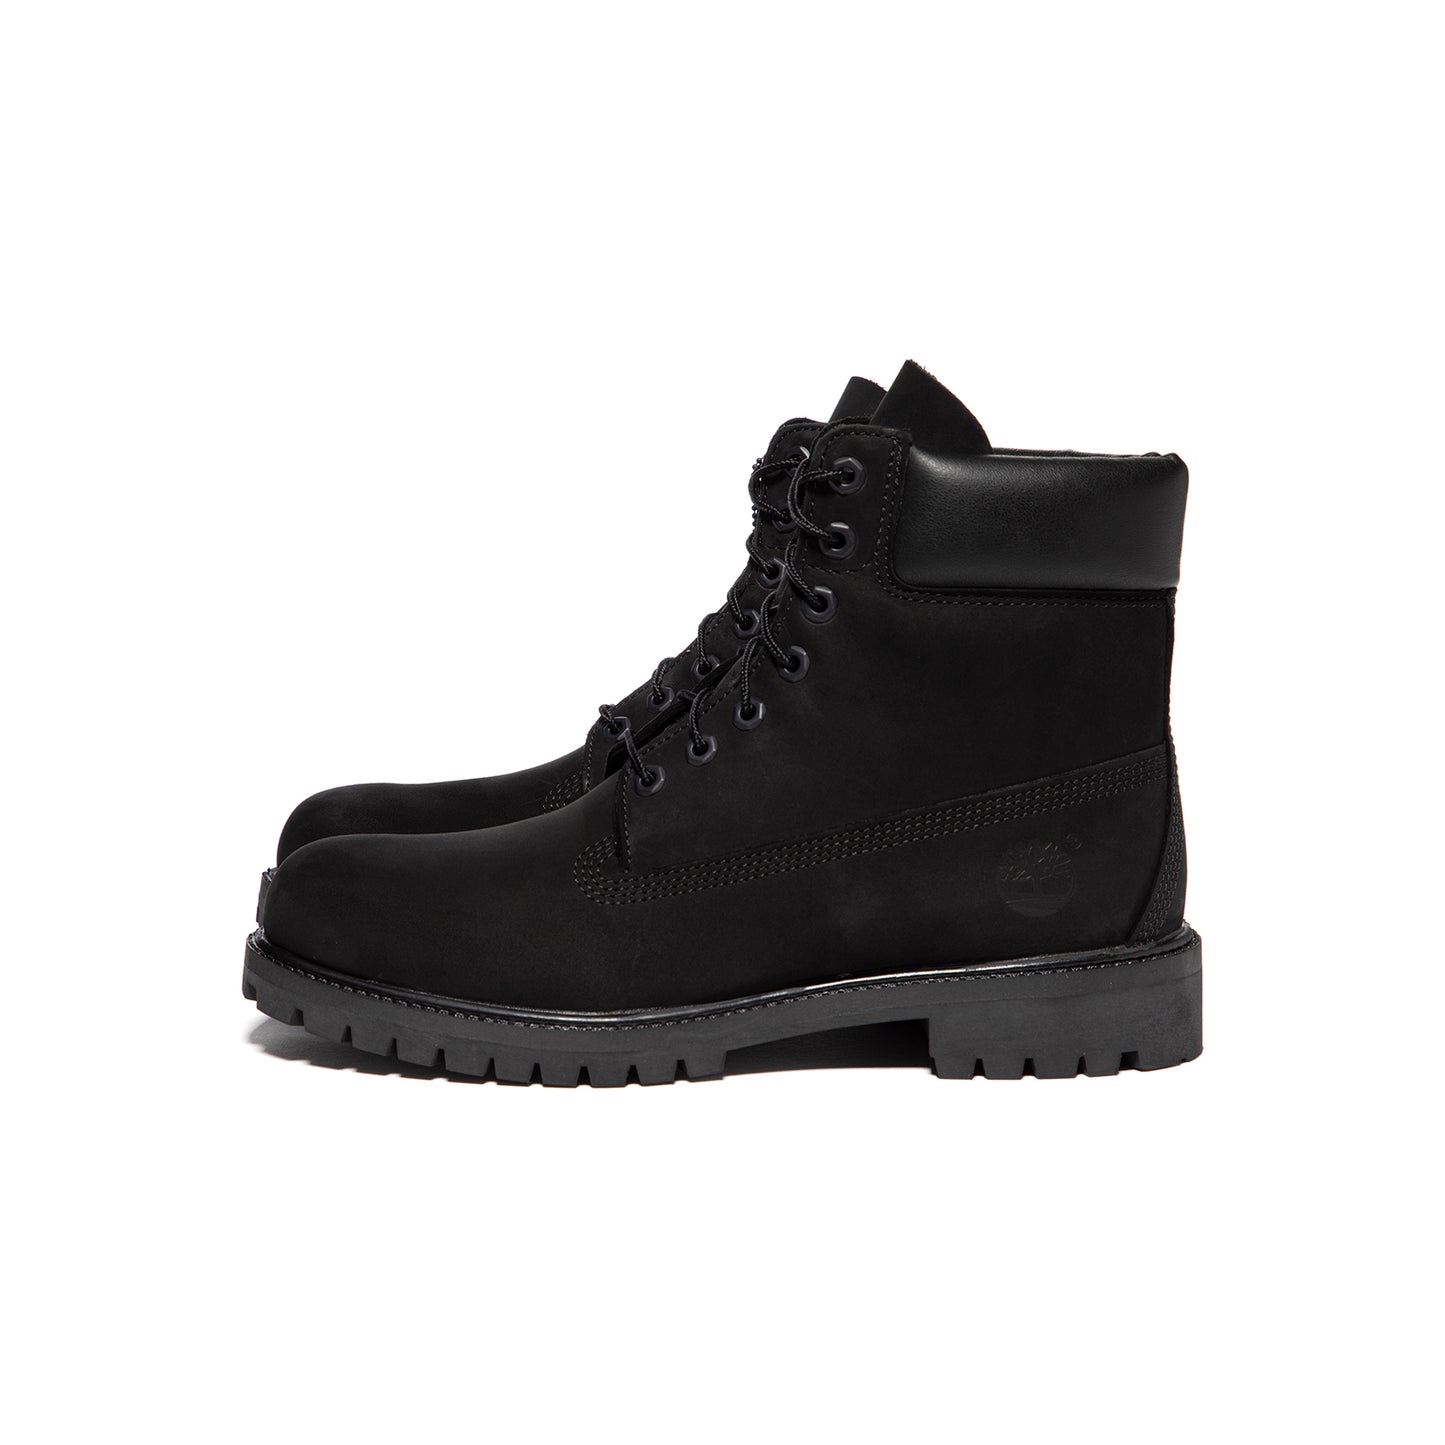 Timberland Premium 6 Inch Boots (Black)